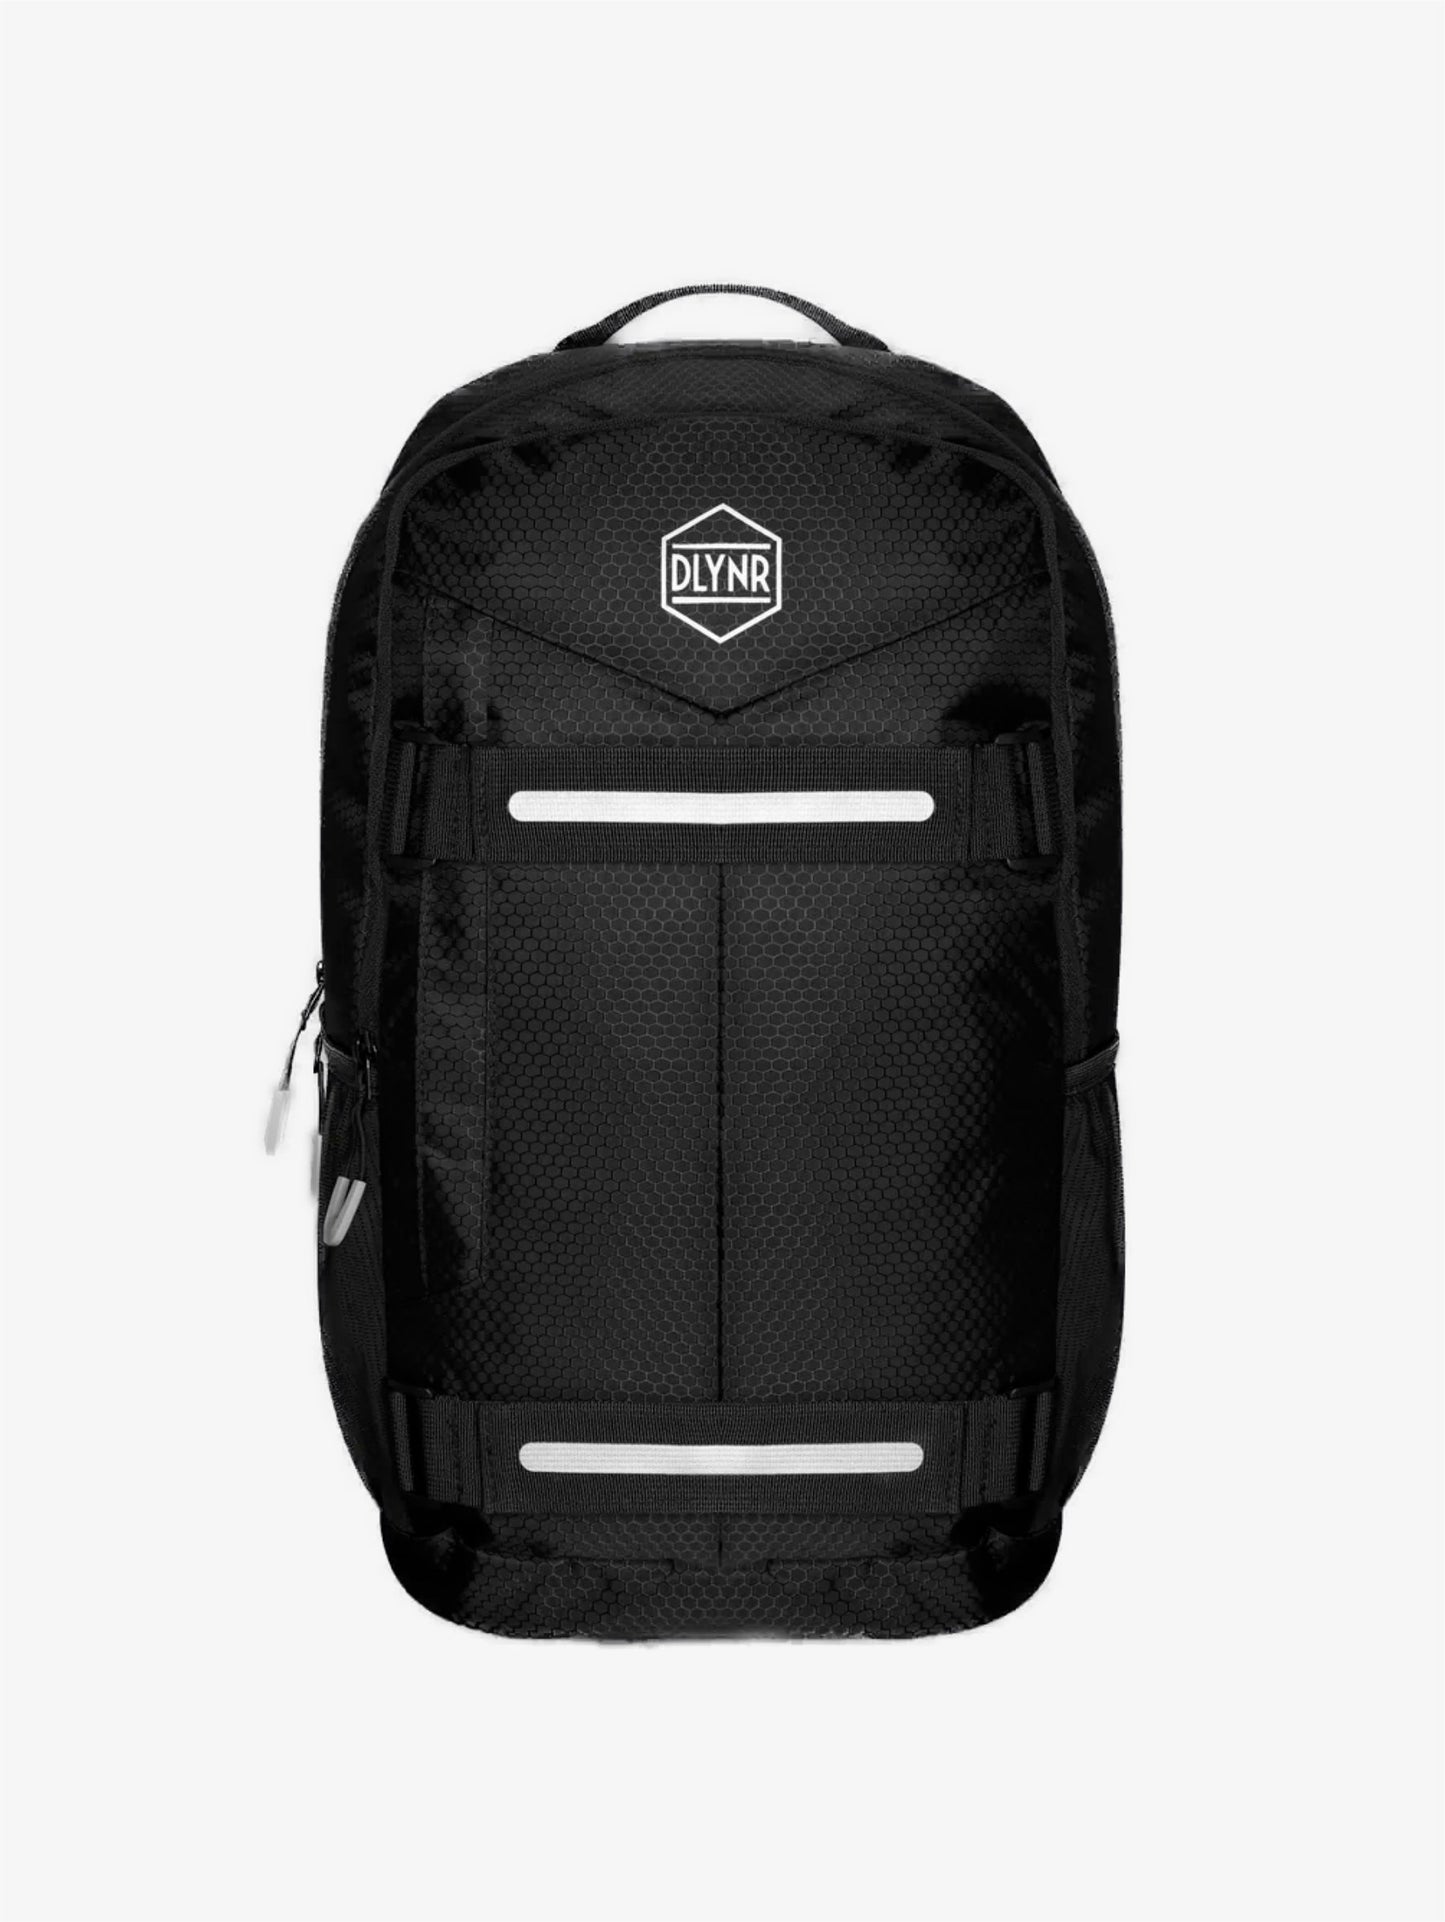 DLYNR Urban Tactical Reflective Backpack black zaino